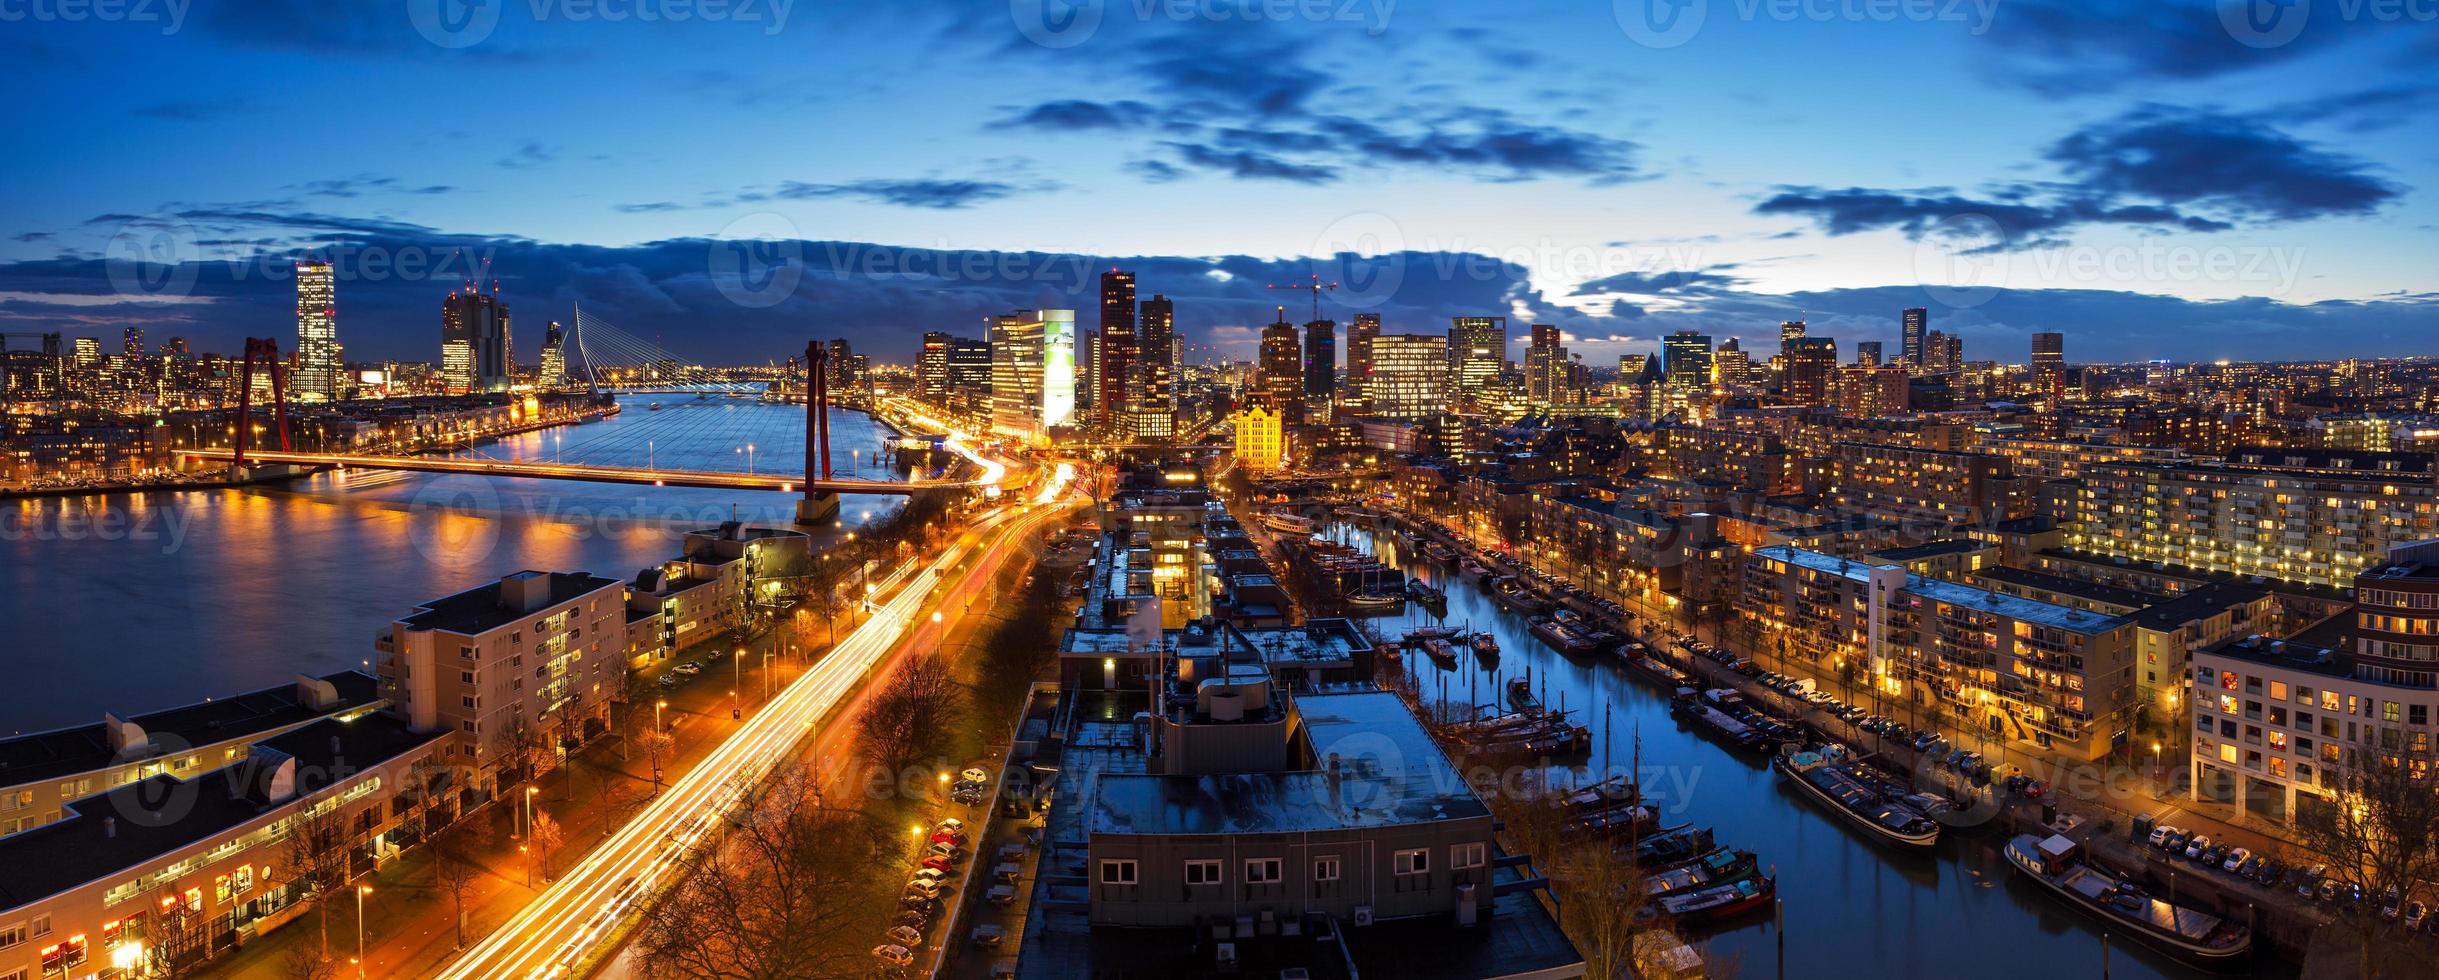 Rotterdam night skyline photo